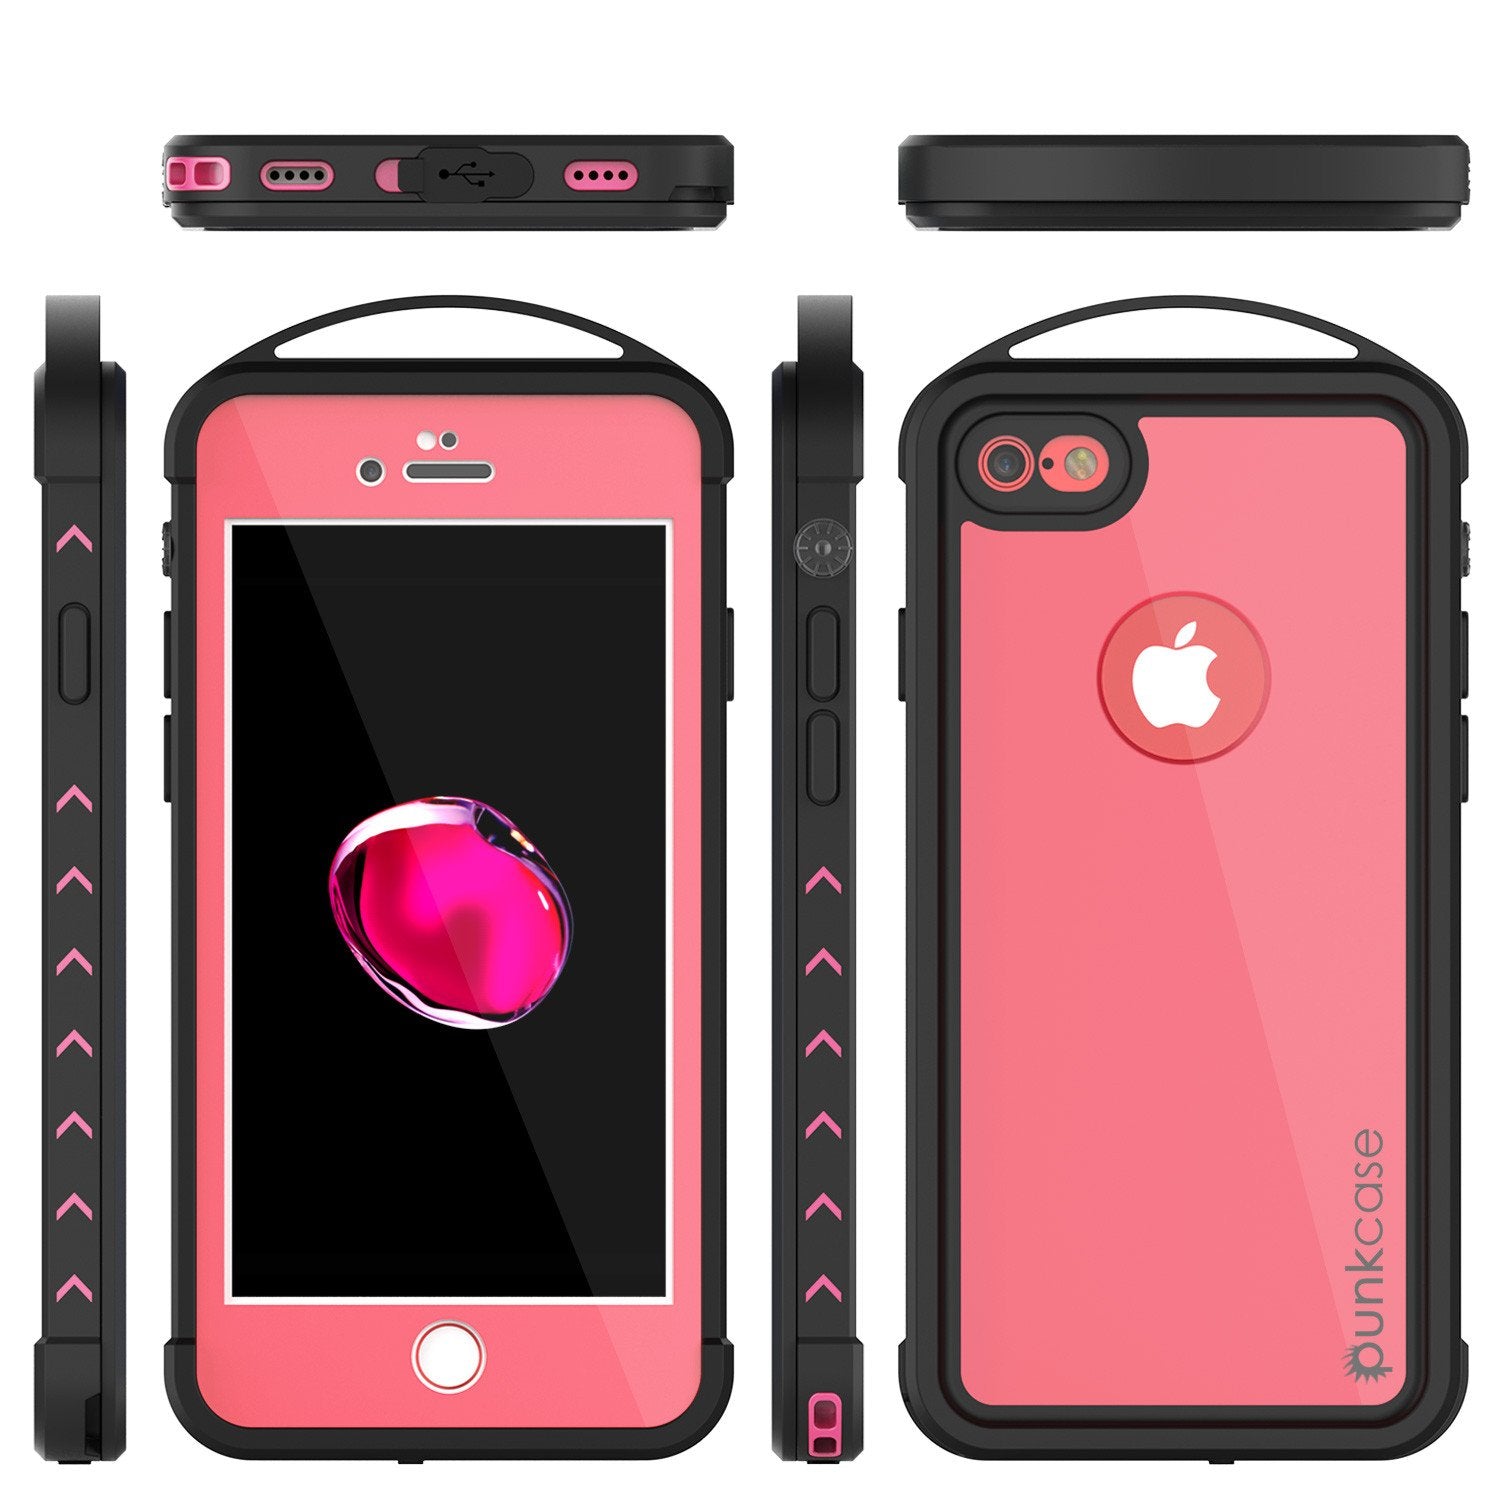 iPhone 7 Waterproof Case, Punkcase ALPINE Series, Pink | Heavy Duty Armor Cover